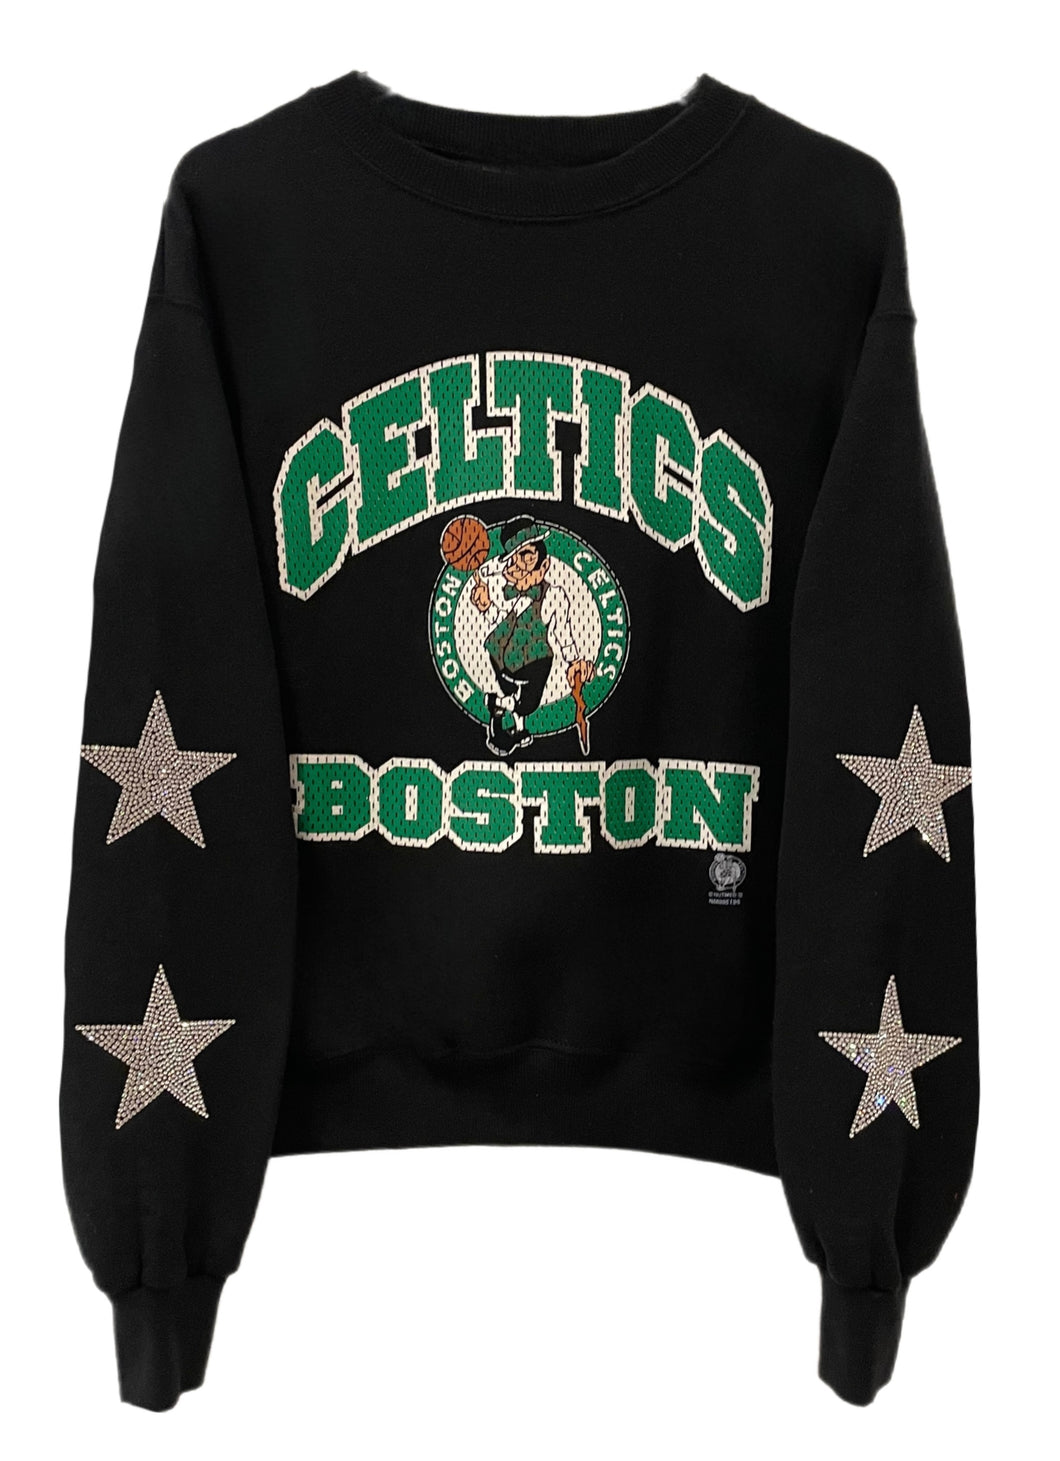 Boston Celtics, NBA One of a KIND Vintage Sweatshirt with Crystal Star Design